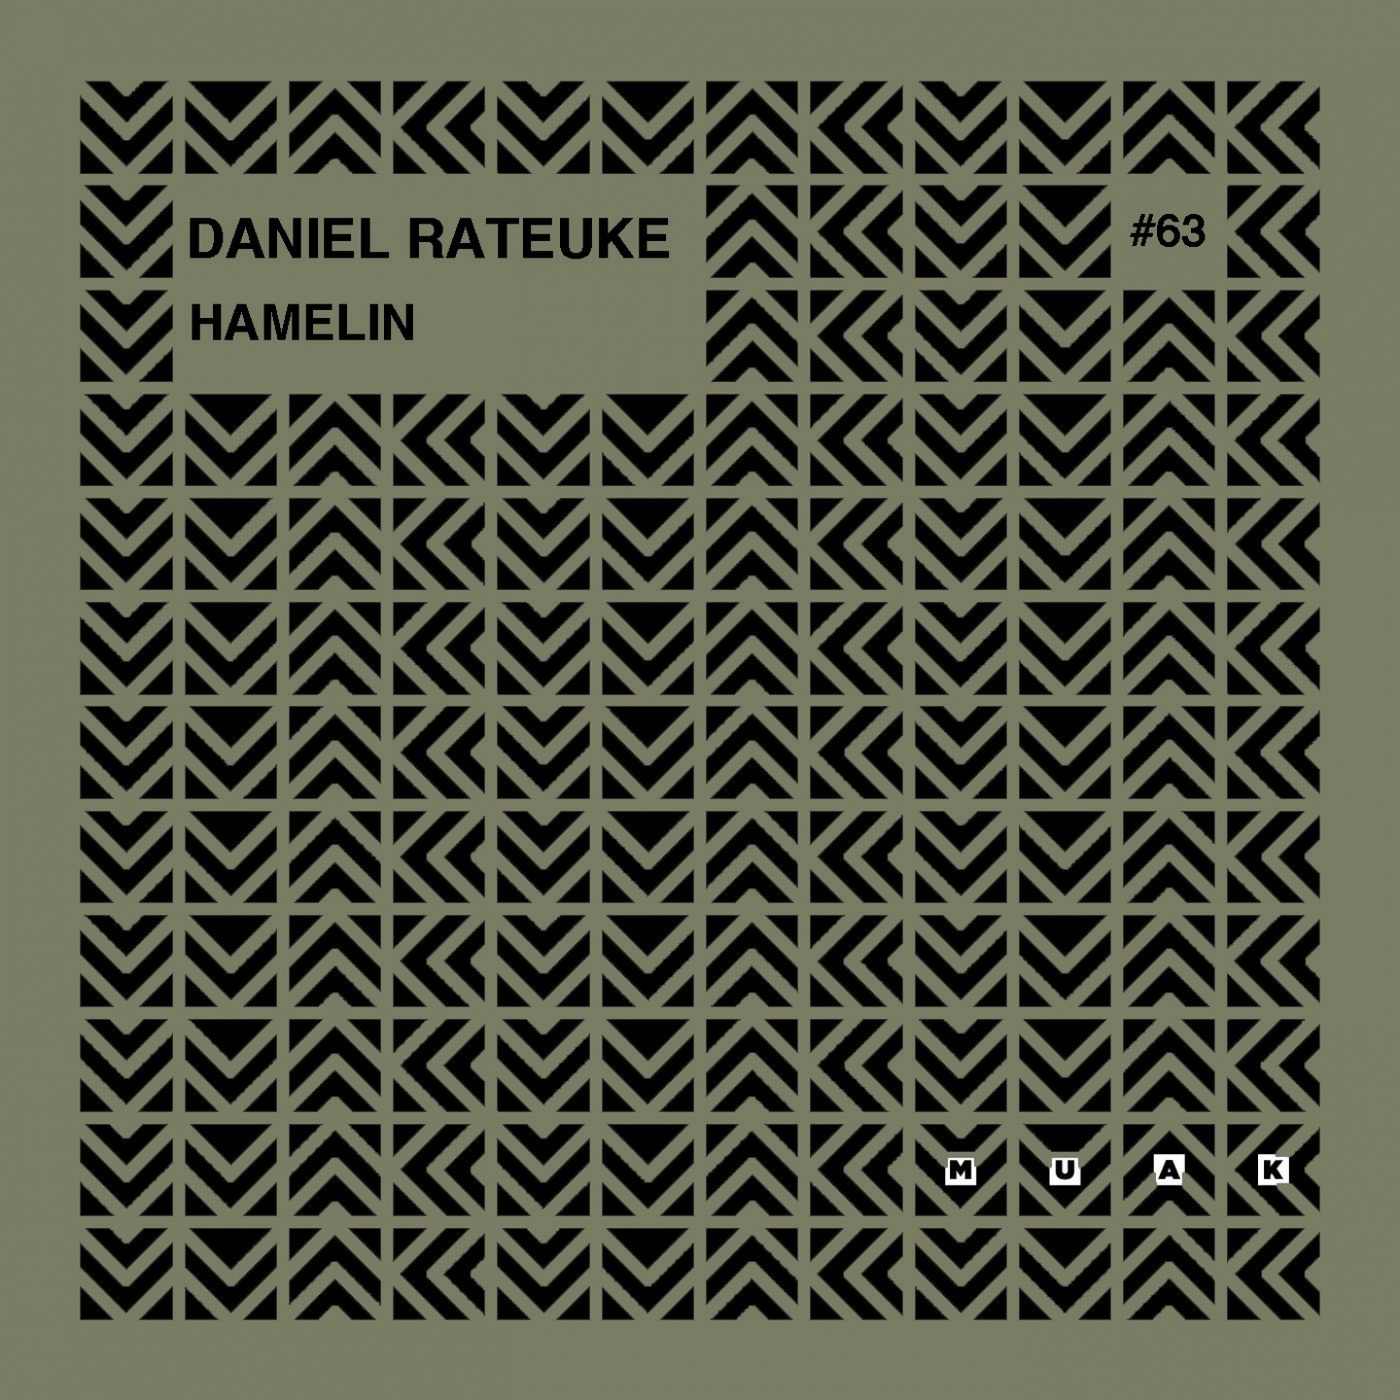 Daniel Rateuke - Hamelin / Muak Music